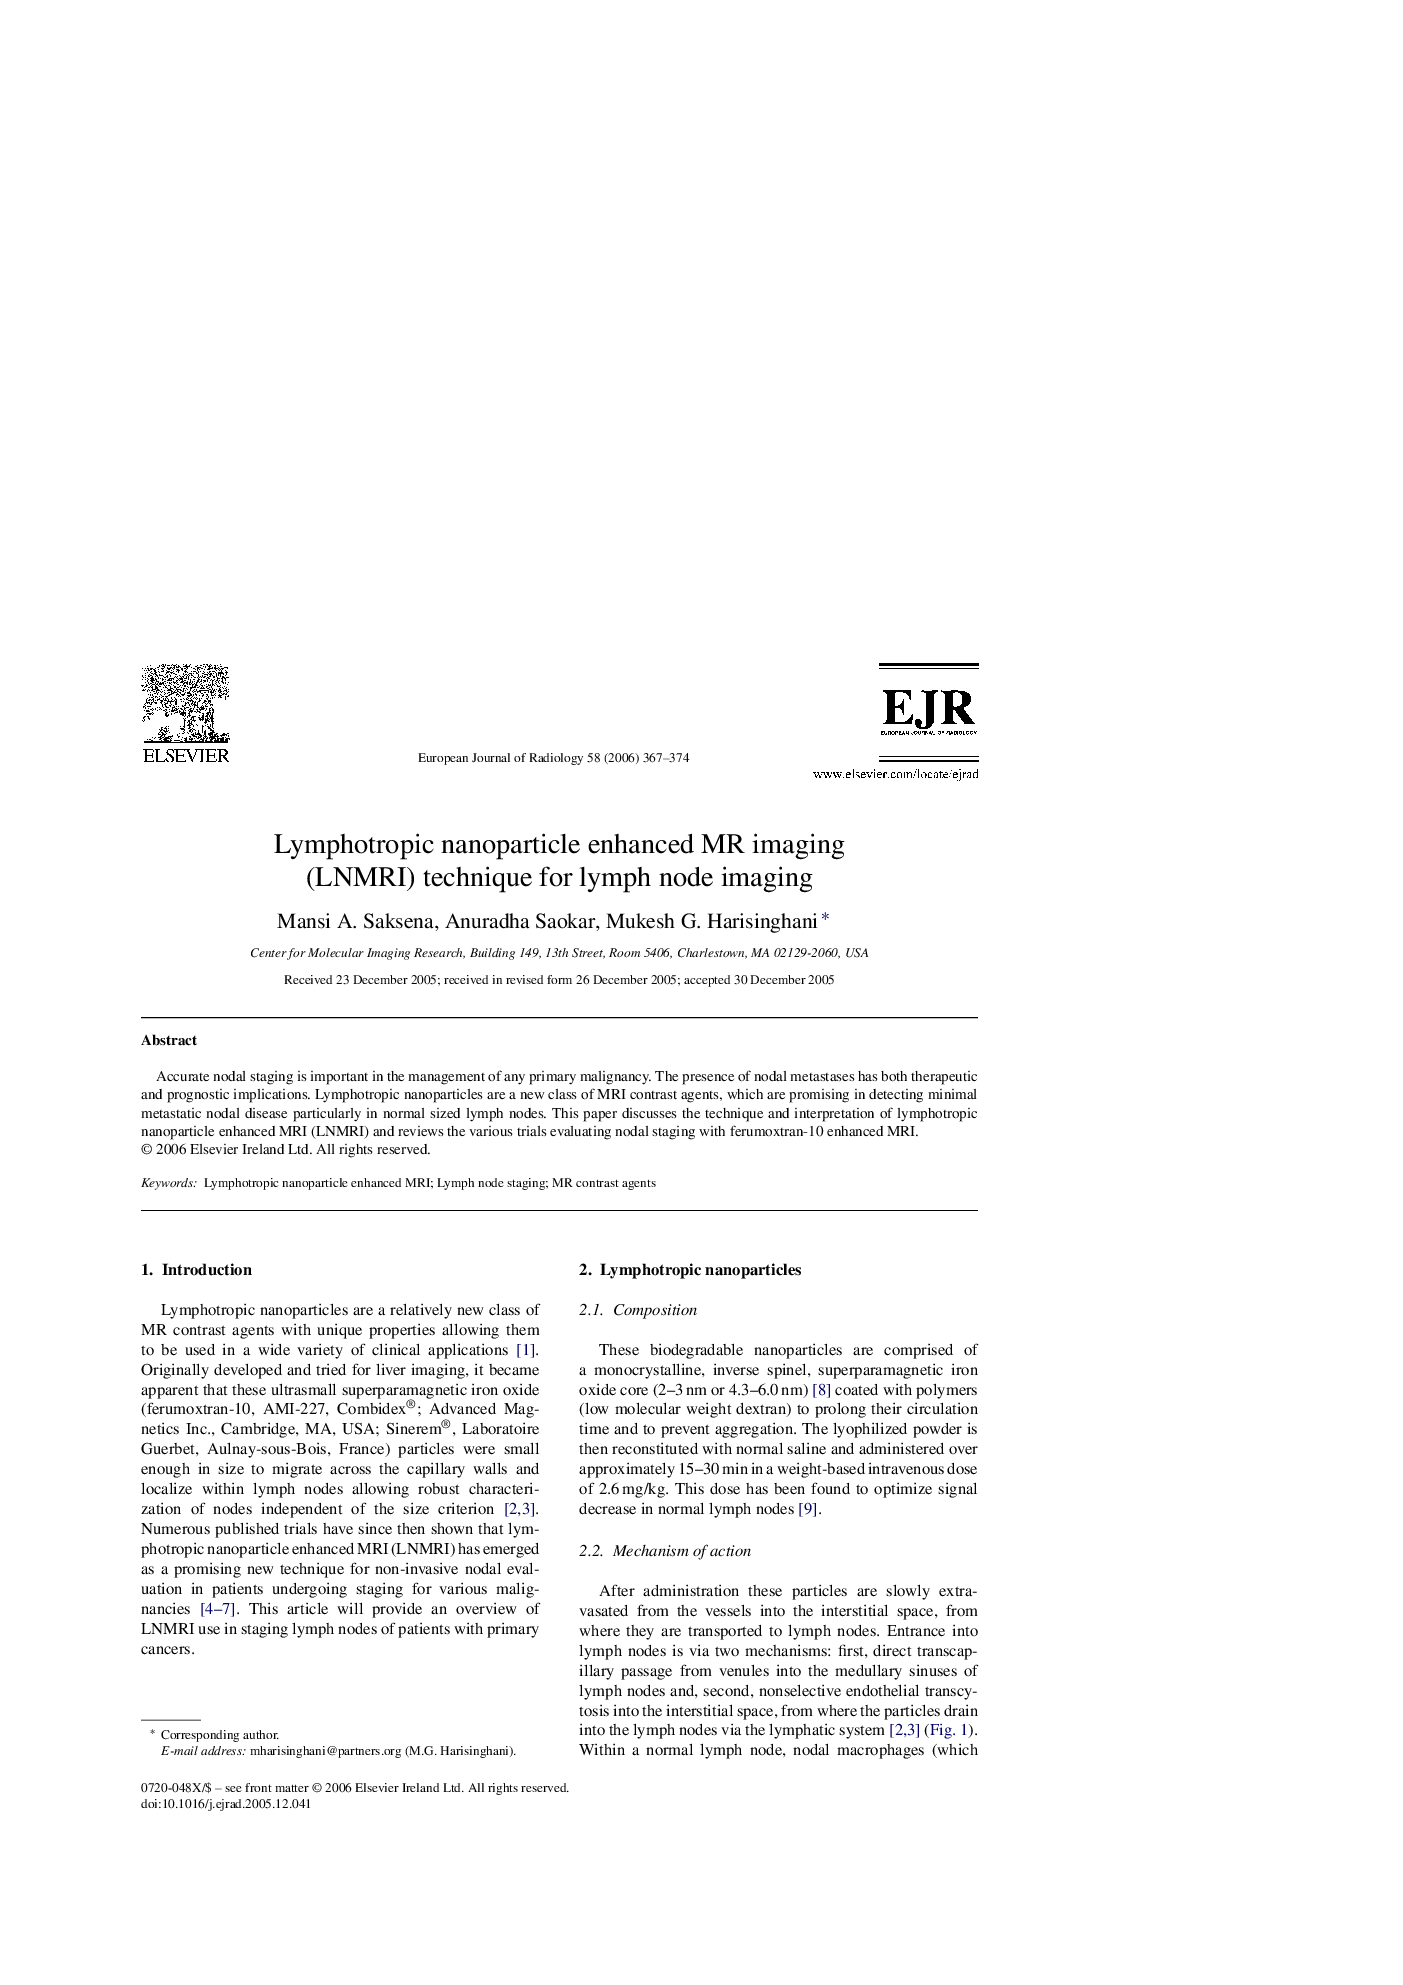 Lymphotropic nanoparticle enhanced MR imaging (LNMRI) technique for lymph node imaging